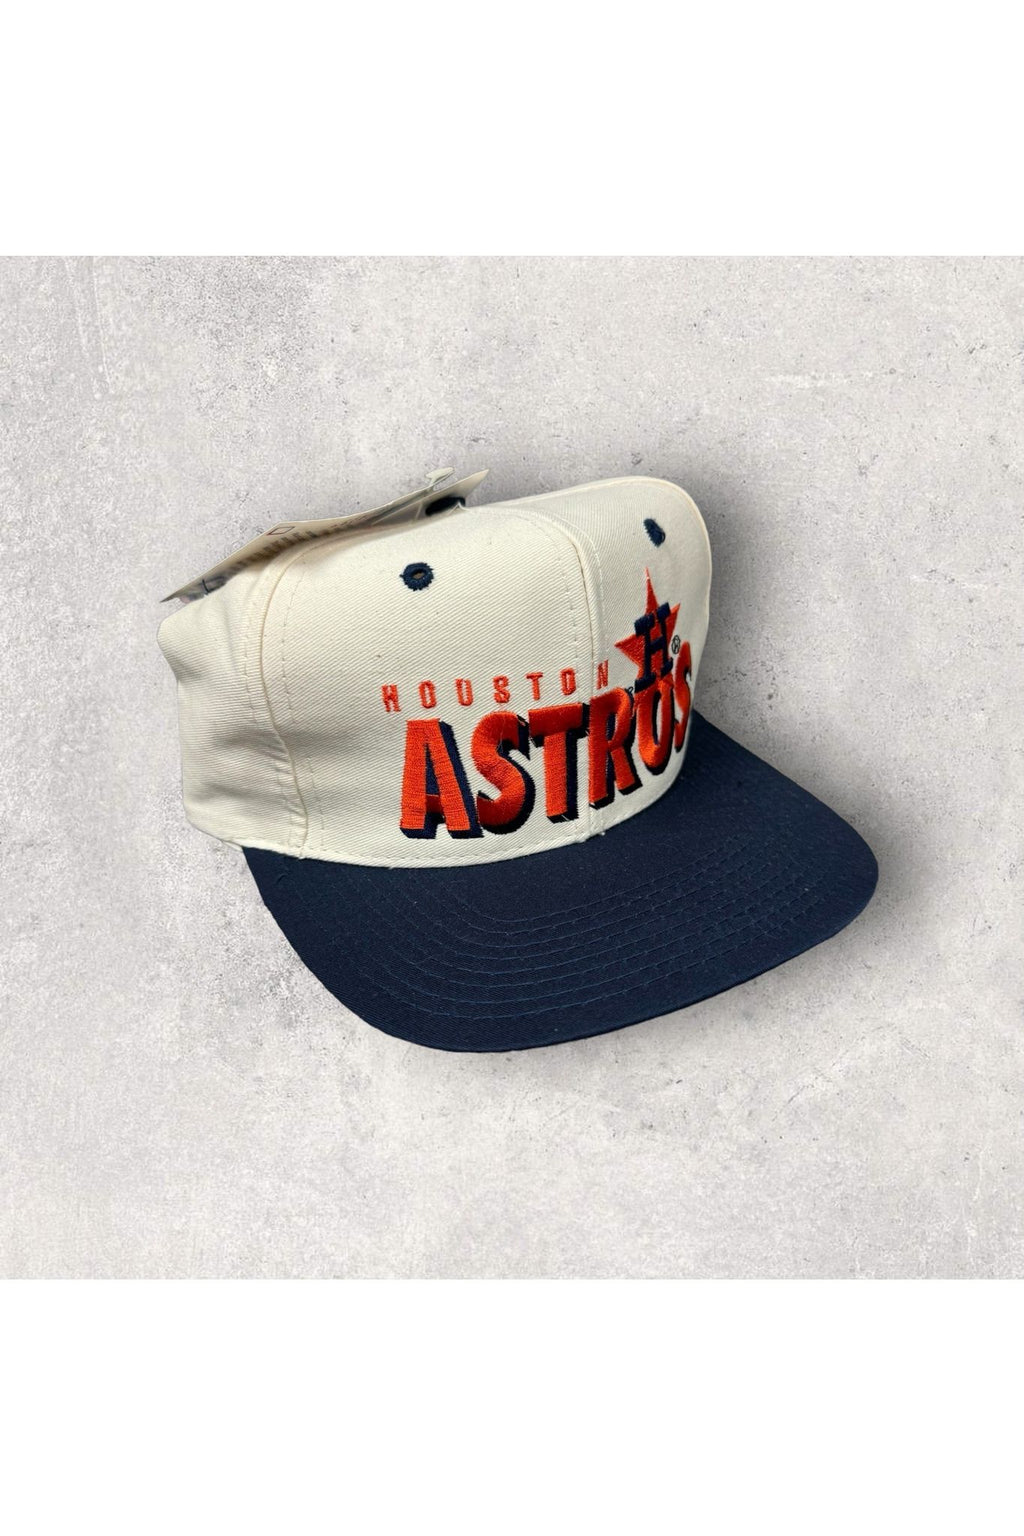 Vintage Houston Astros Deadstock Snapback